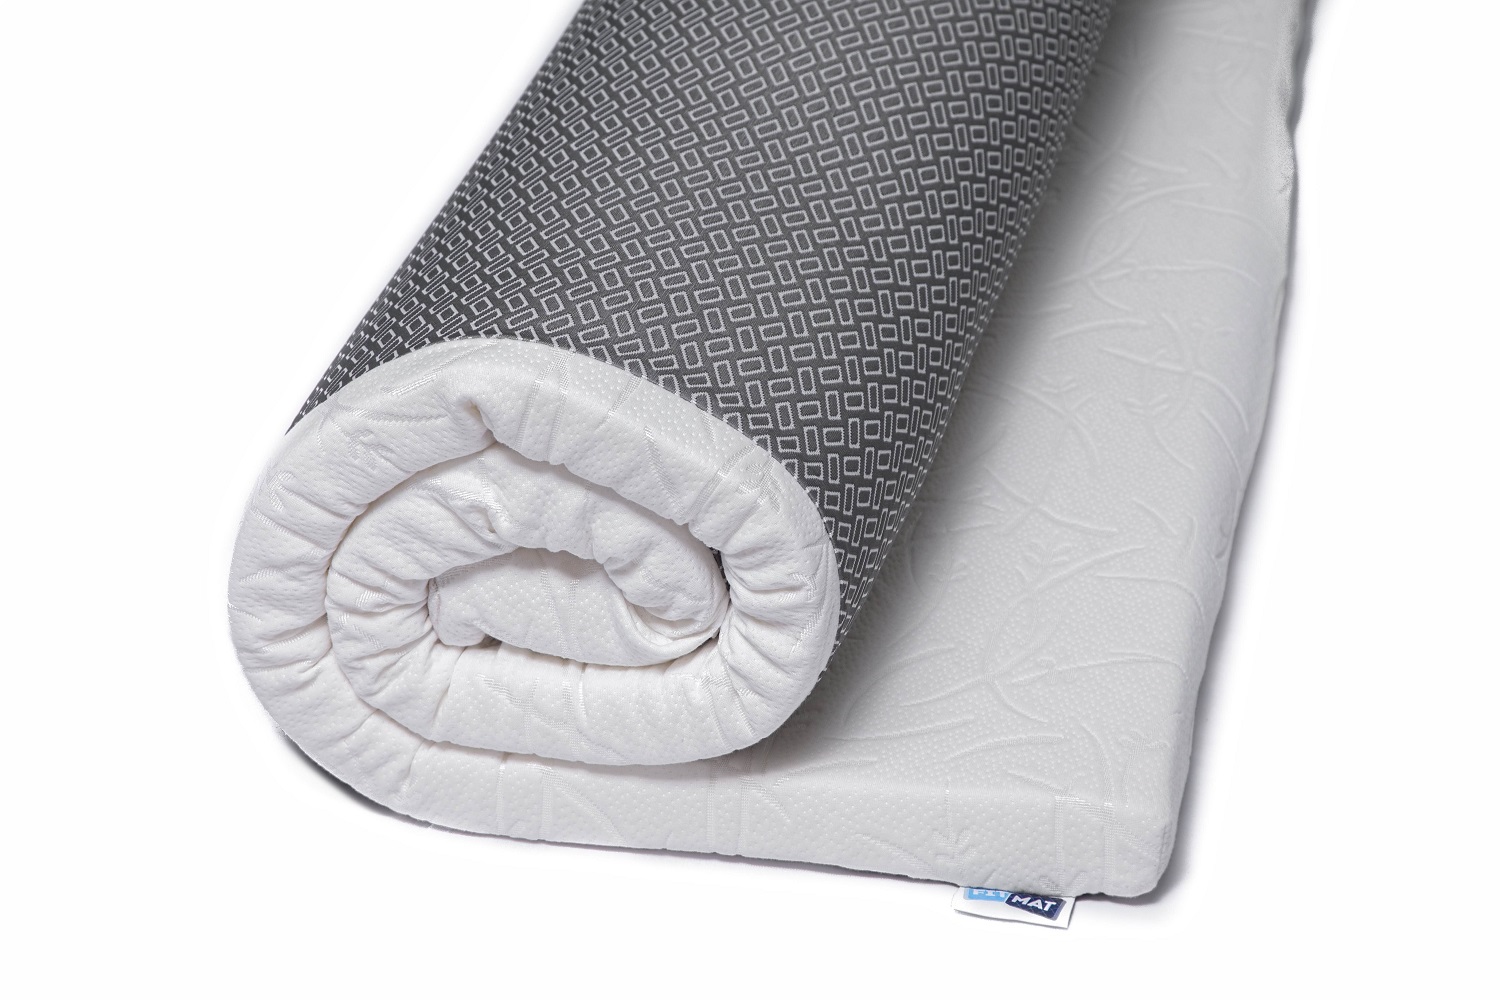 foam mattress zipper cover